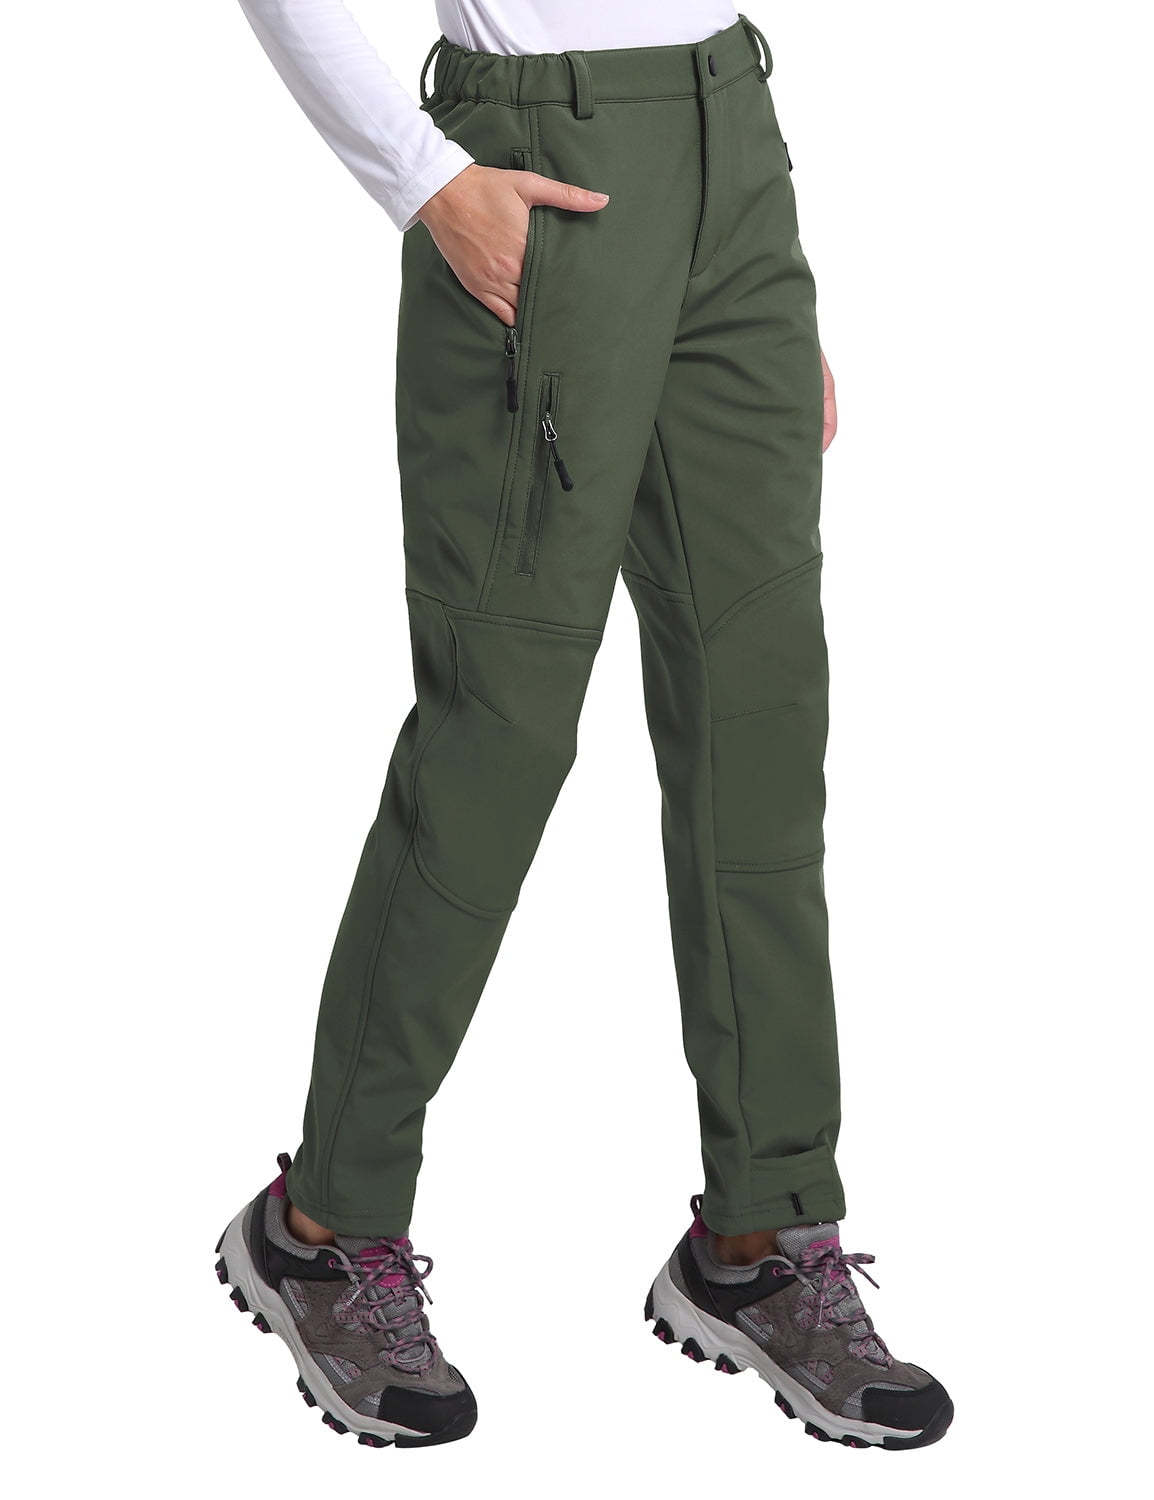 Thick Warm Fleece Winter Pants Women Waterproof Hiking Trekking Camping  Skiing Soft Shell Pants Outdoor Windproof Trousers - AliExpress